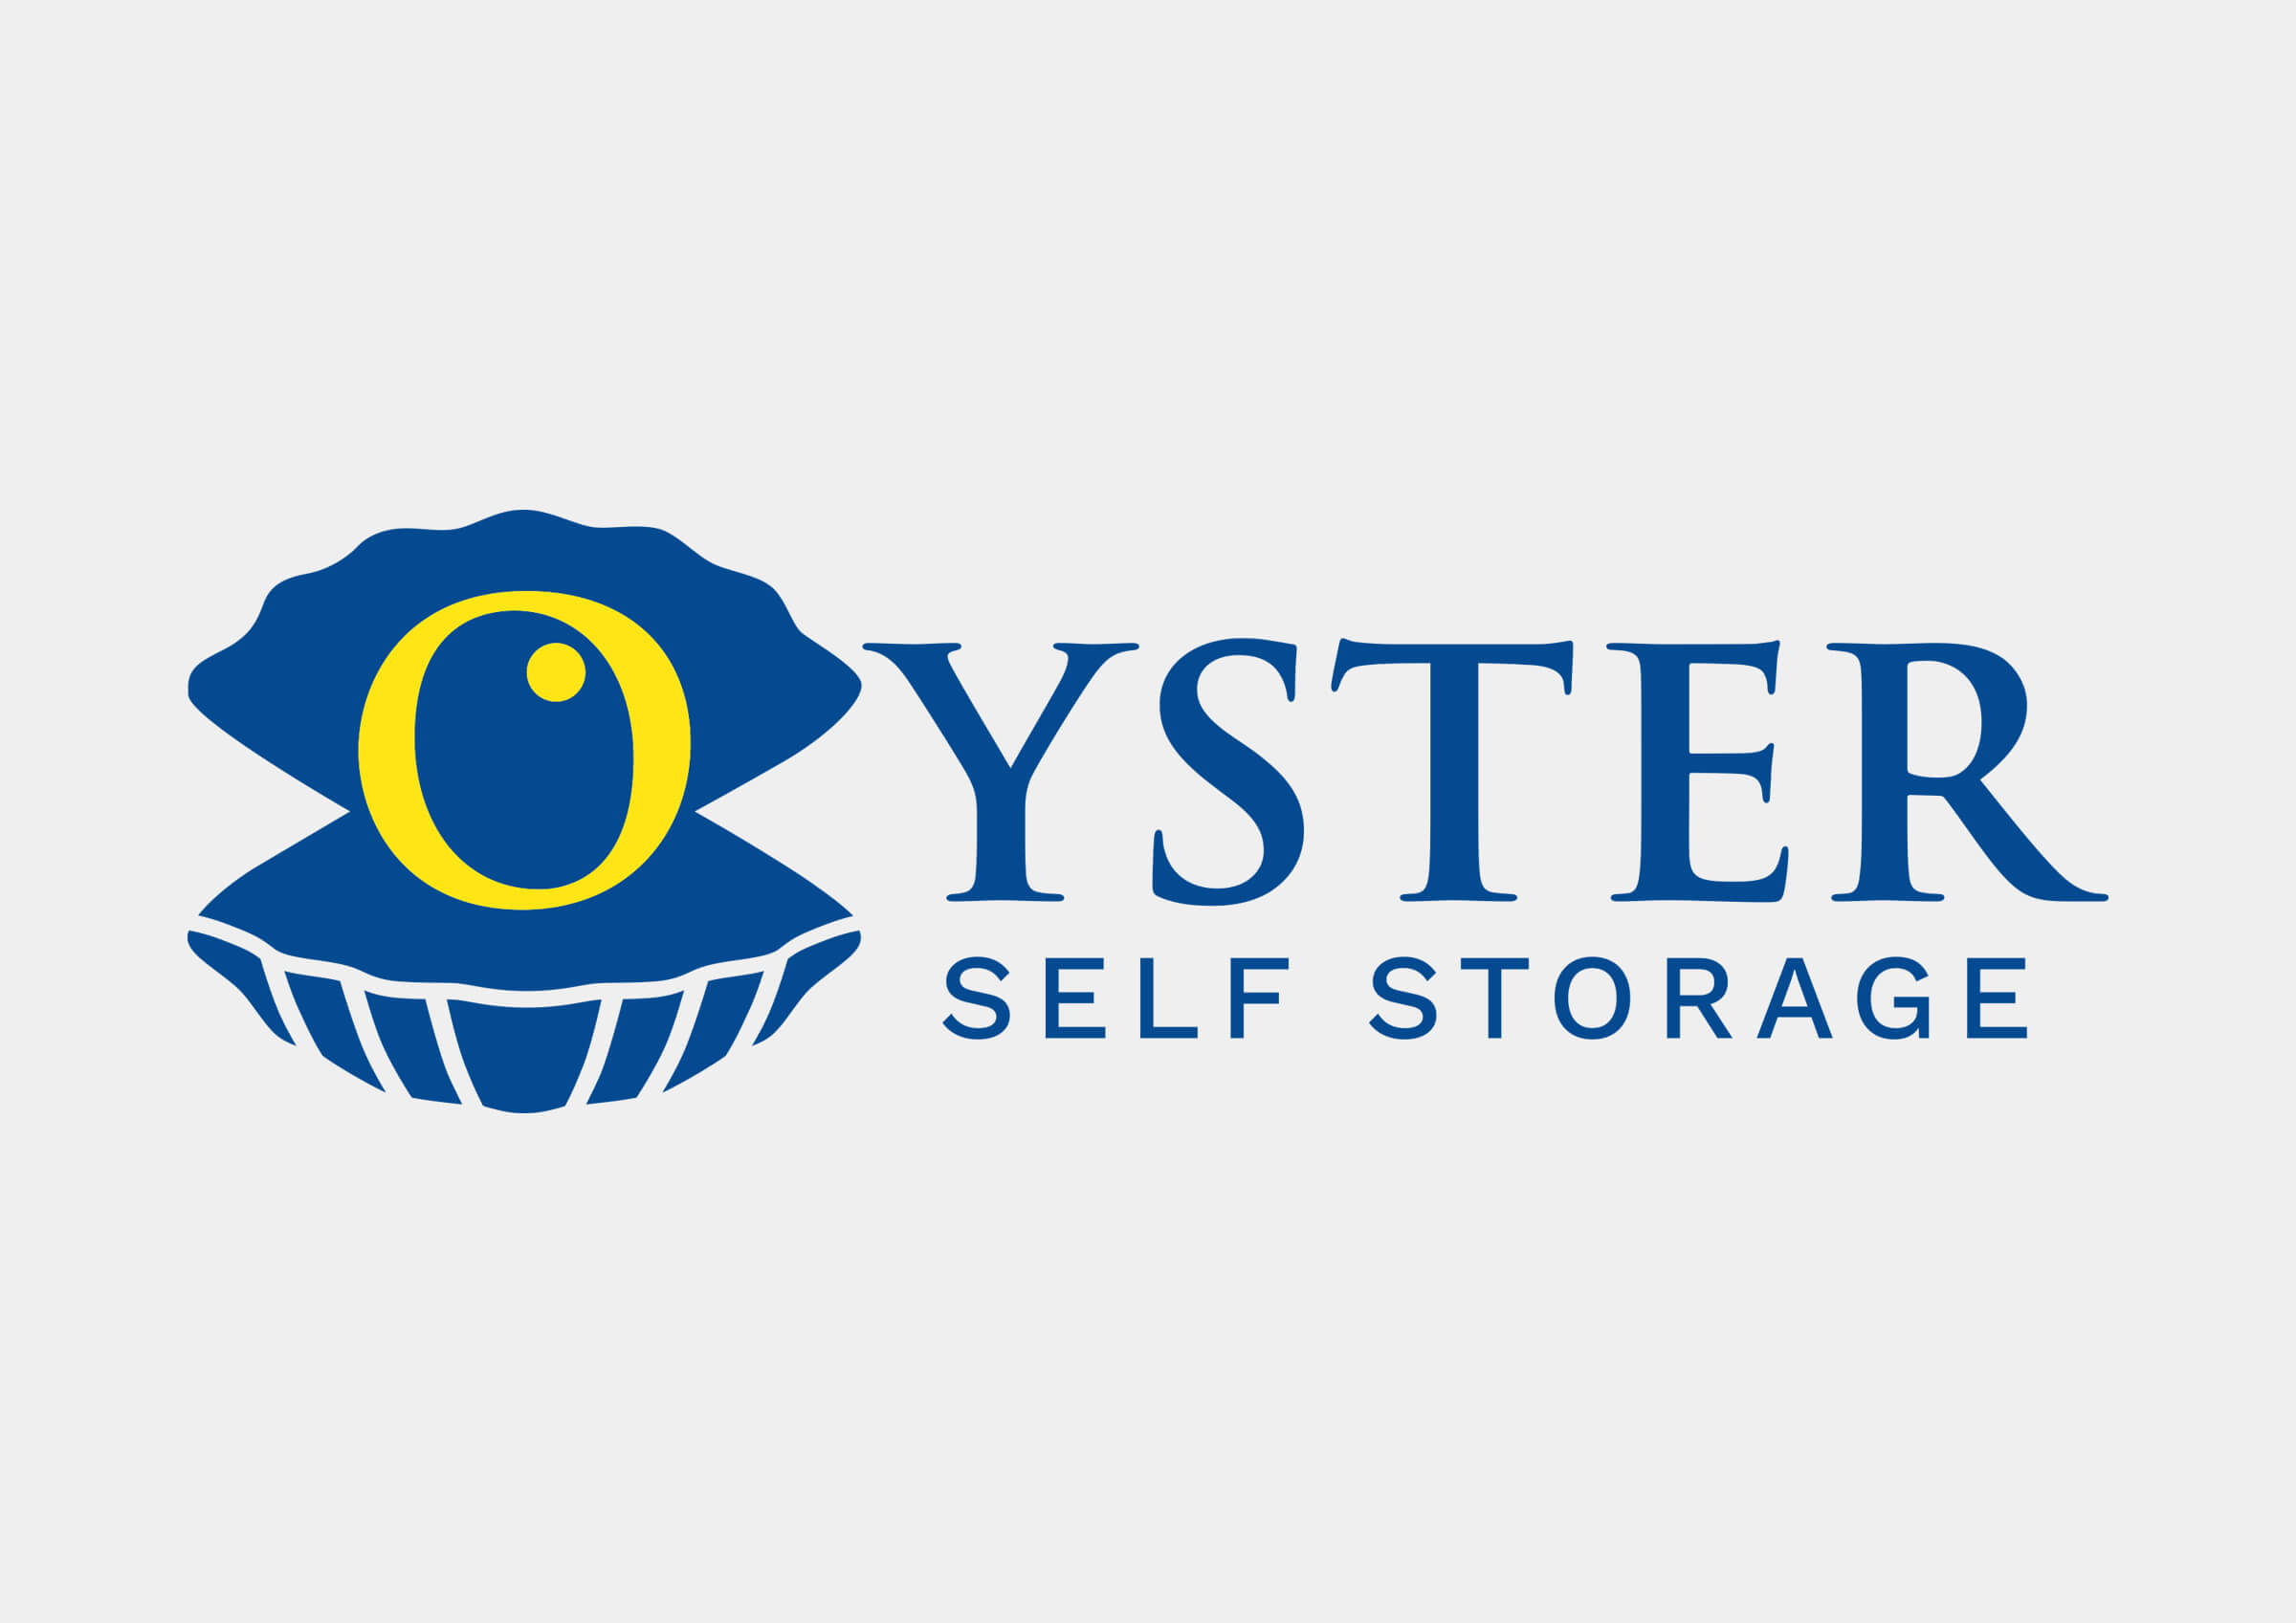 Oyster Self Storage logo